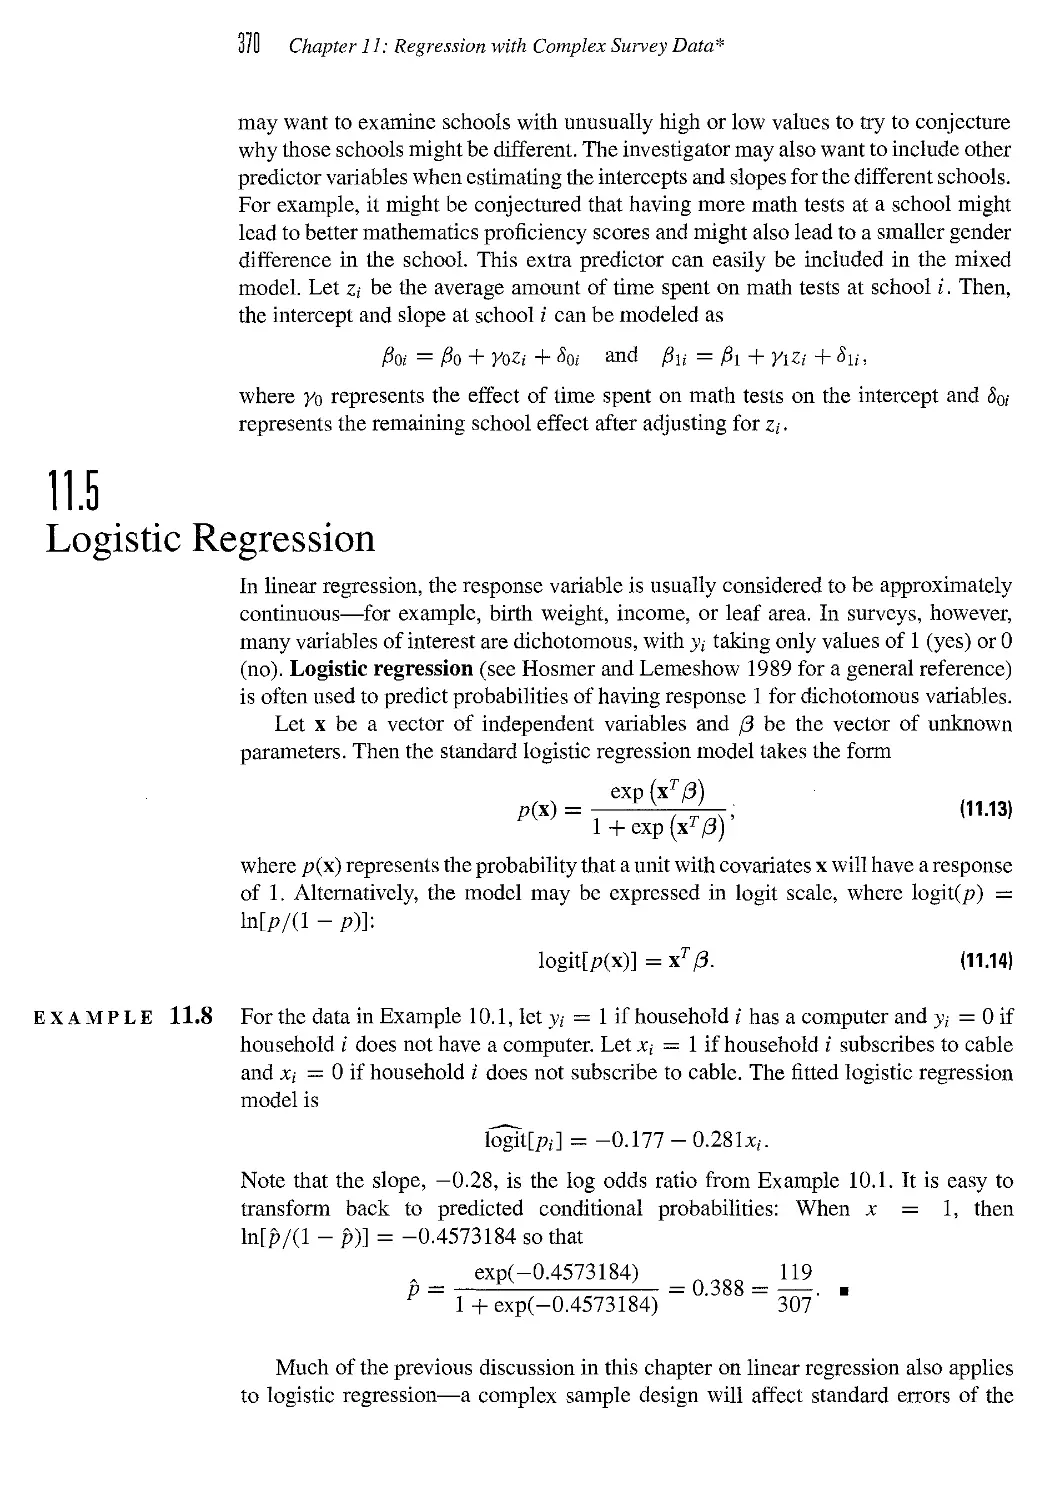 11.5 Logistic Regression